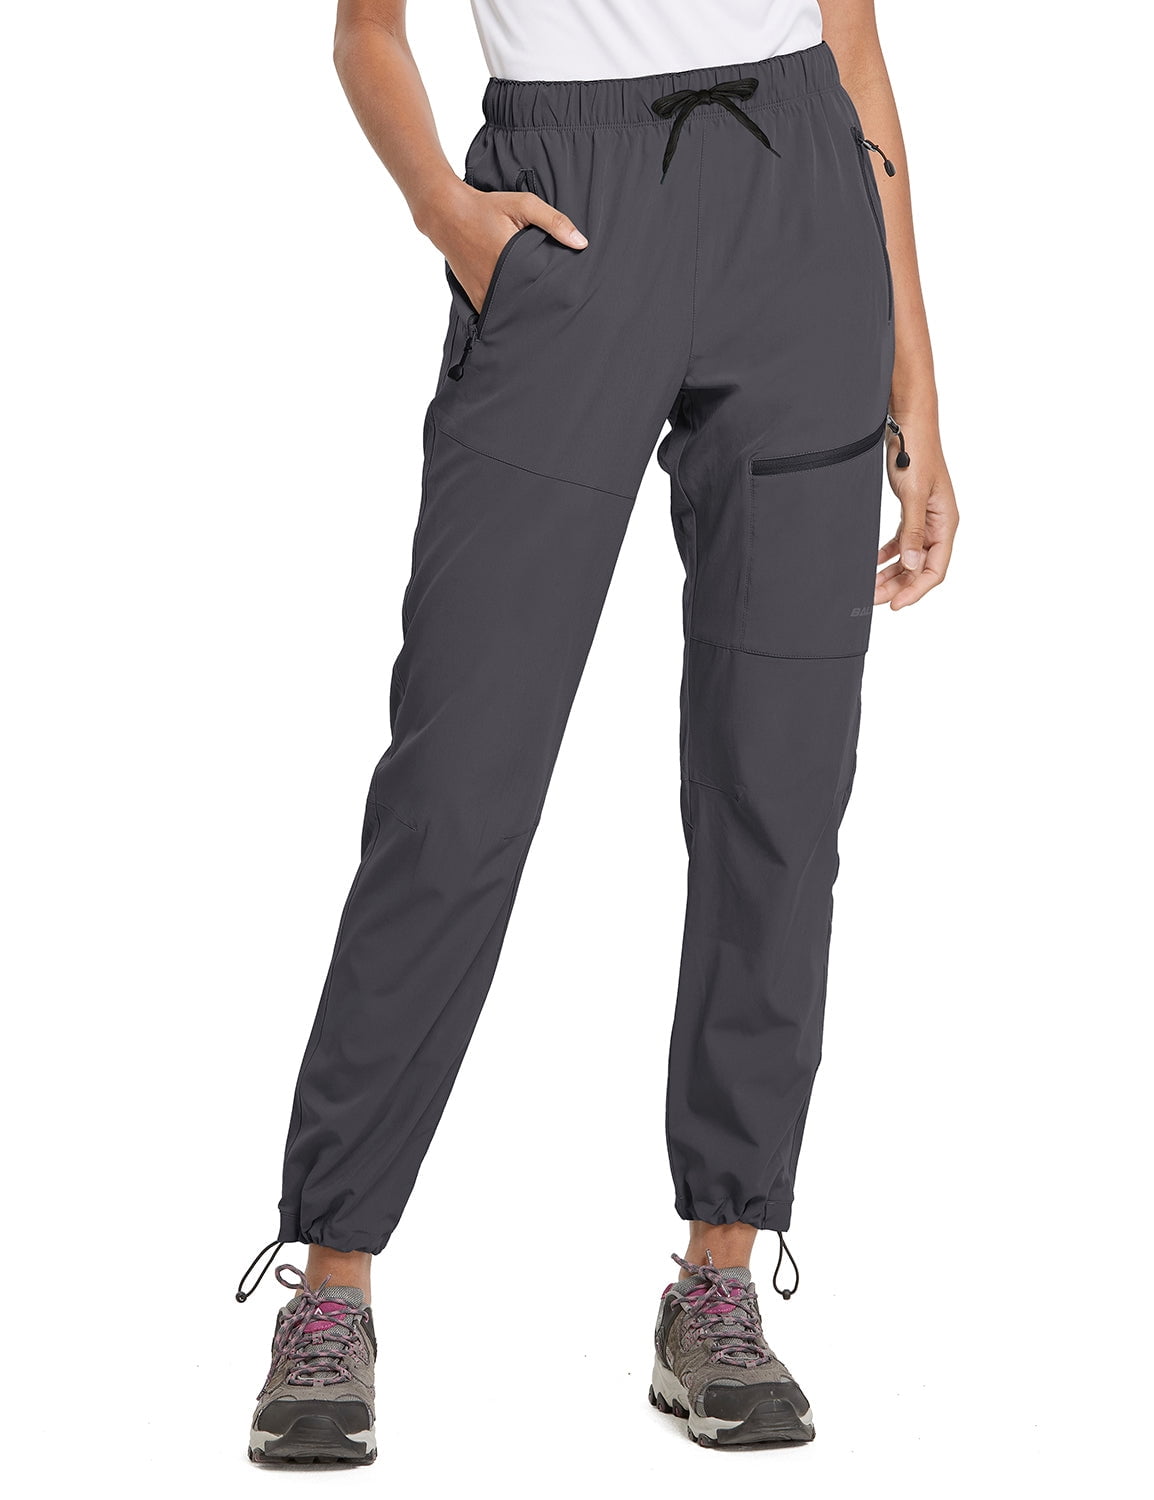 MOCOLY Women's Cargo Hiking Pants Elastic Waist Quick Dry Lightweight Outdoor Water Resistant UPF 50 Long Pants Zipper 